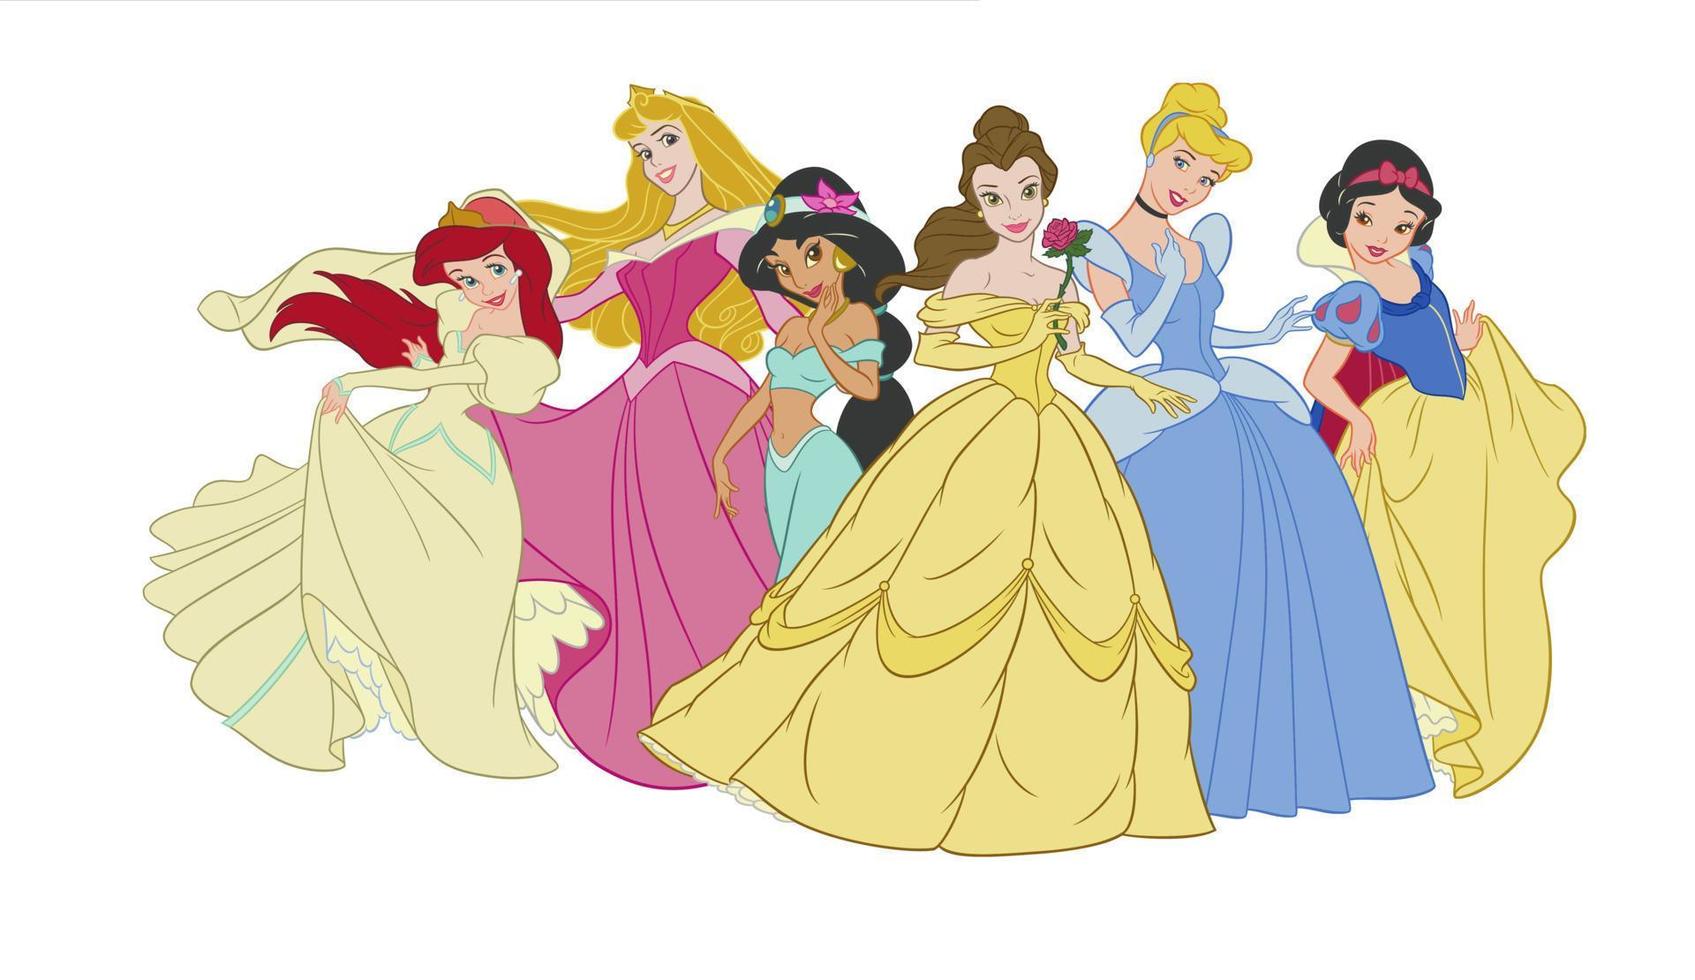 Disney princesas dentro fada contos vetor